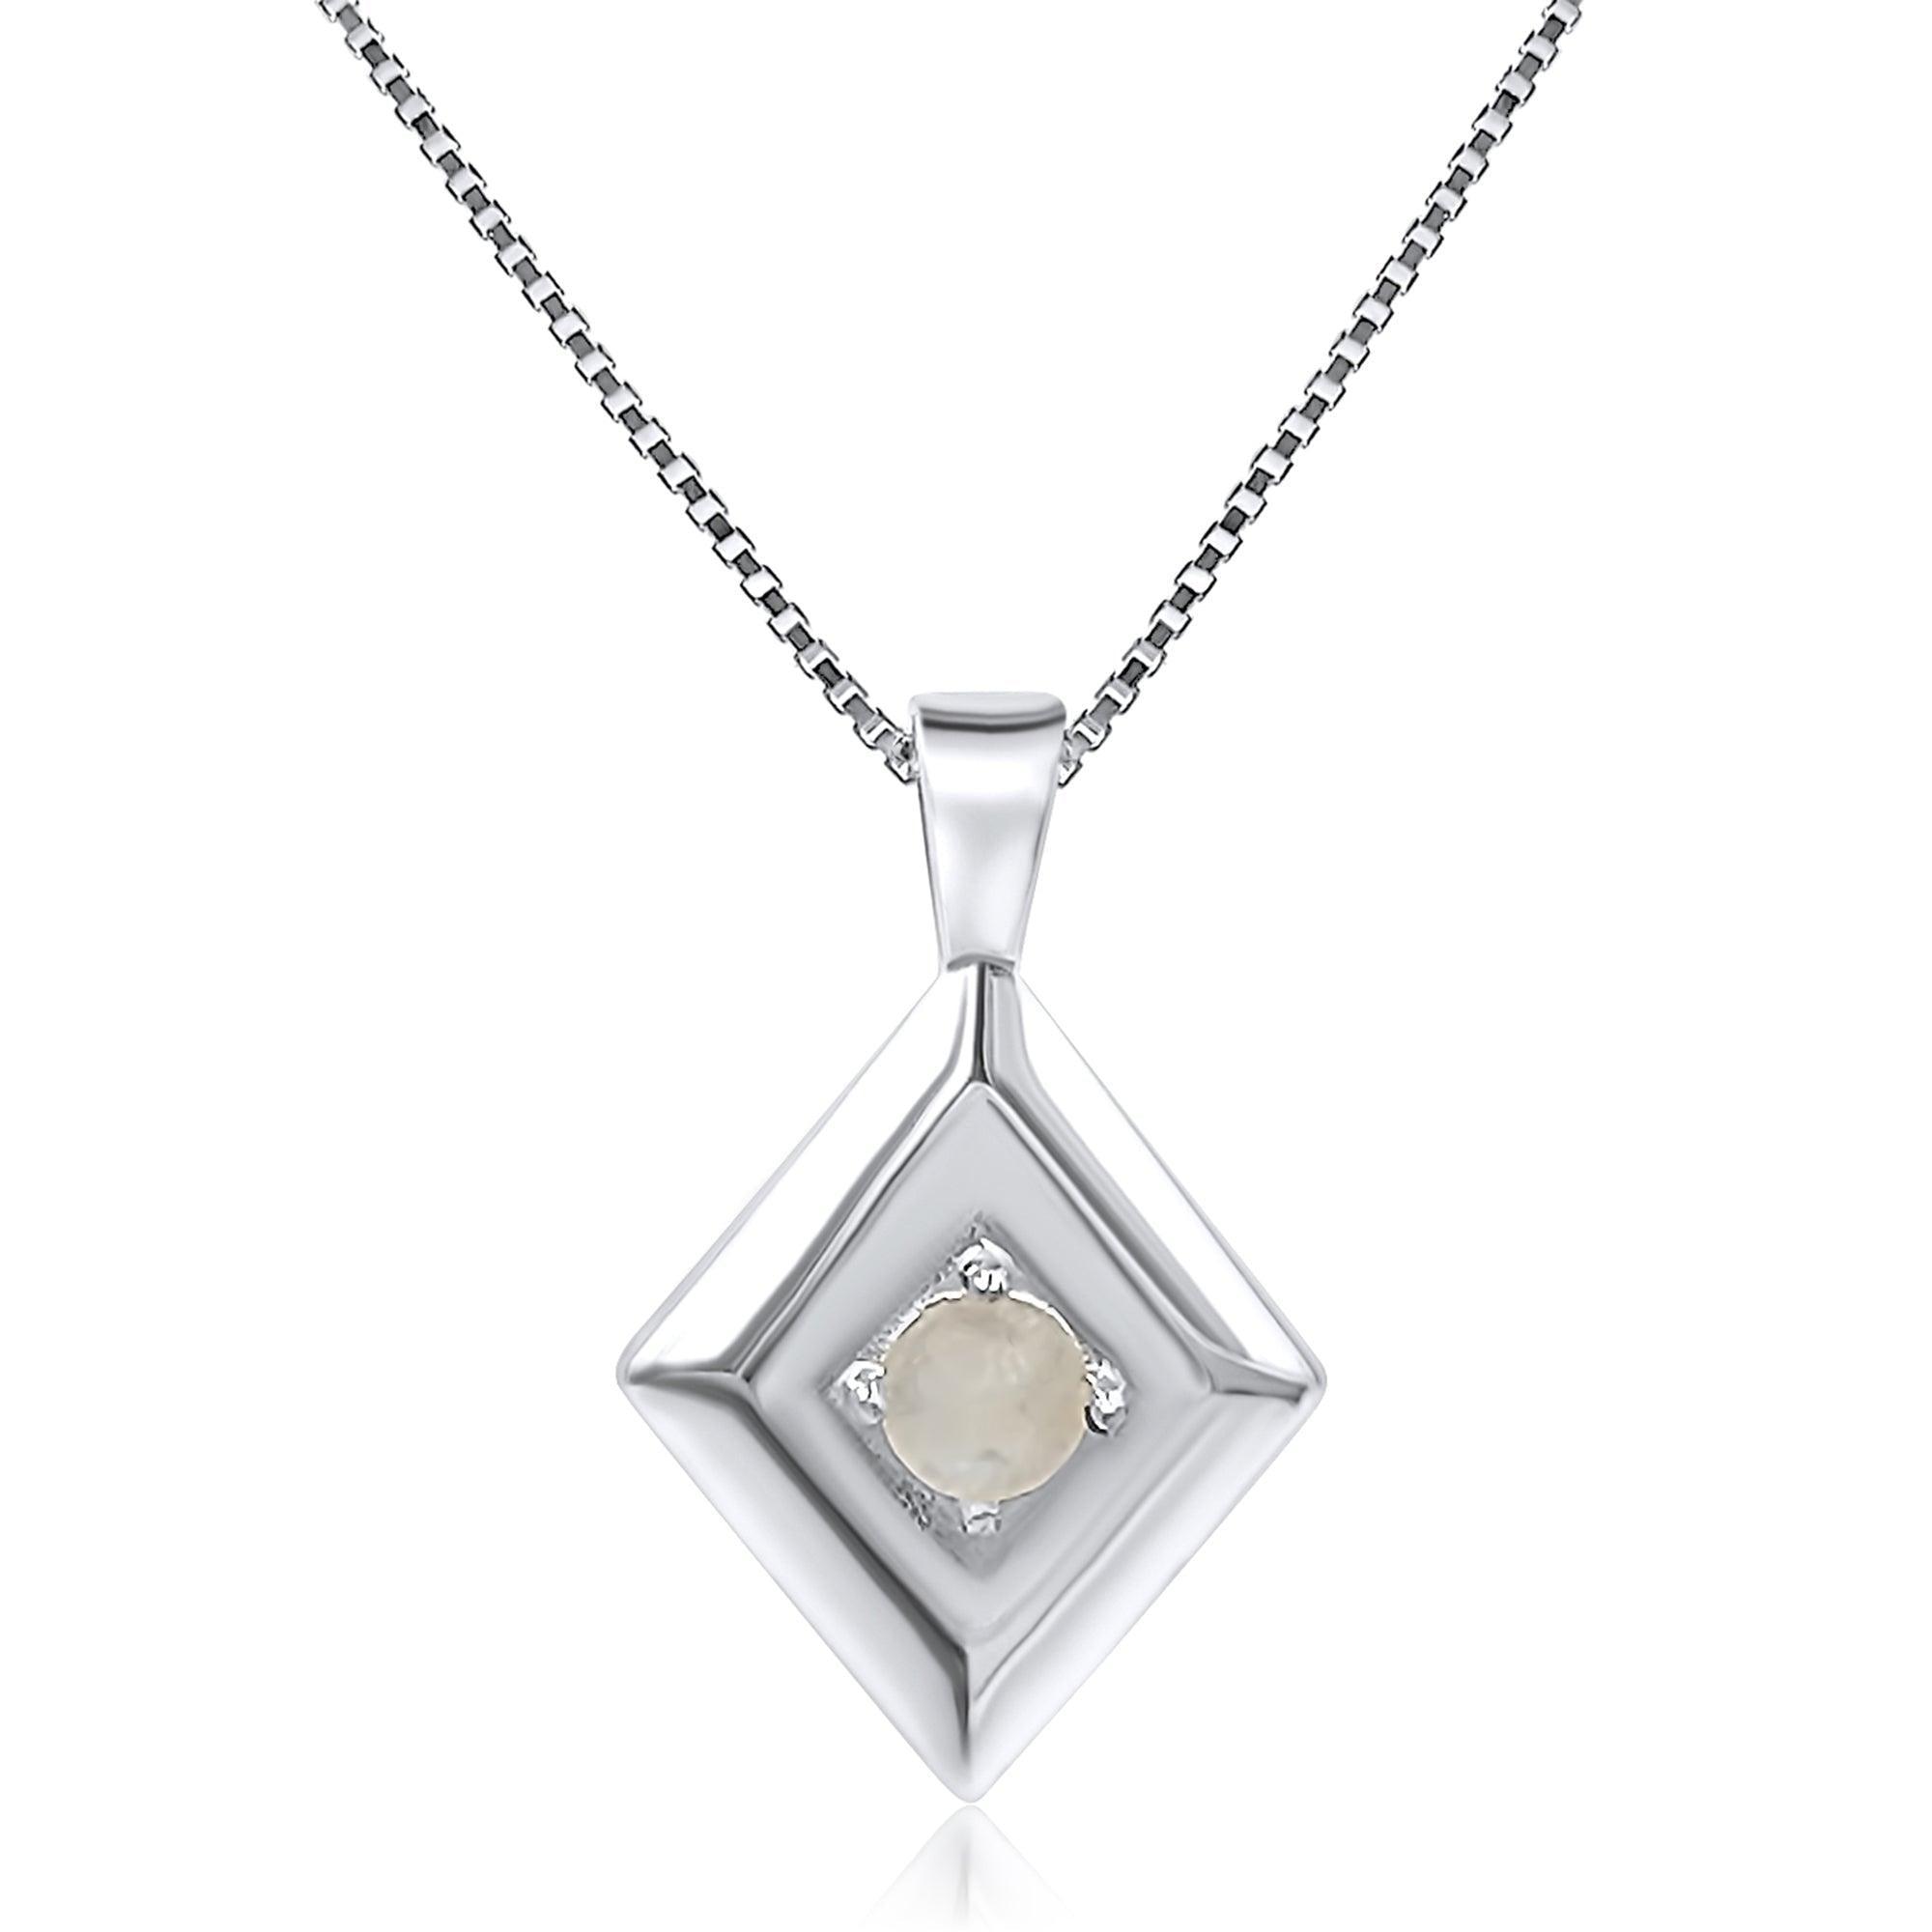 Natural Moonstone Pendant Necklace - Uniquelan Jewelry